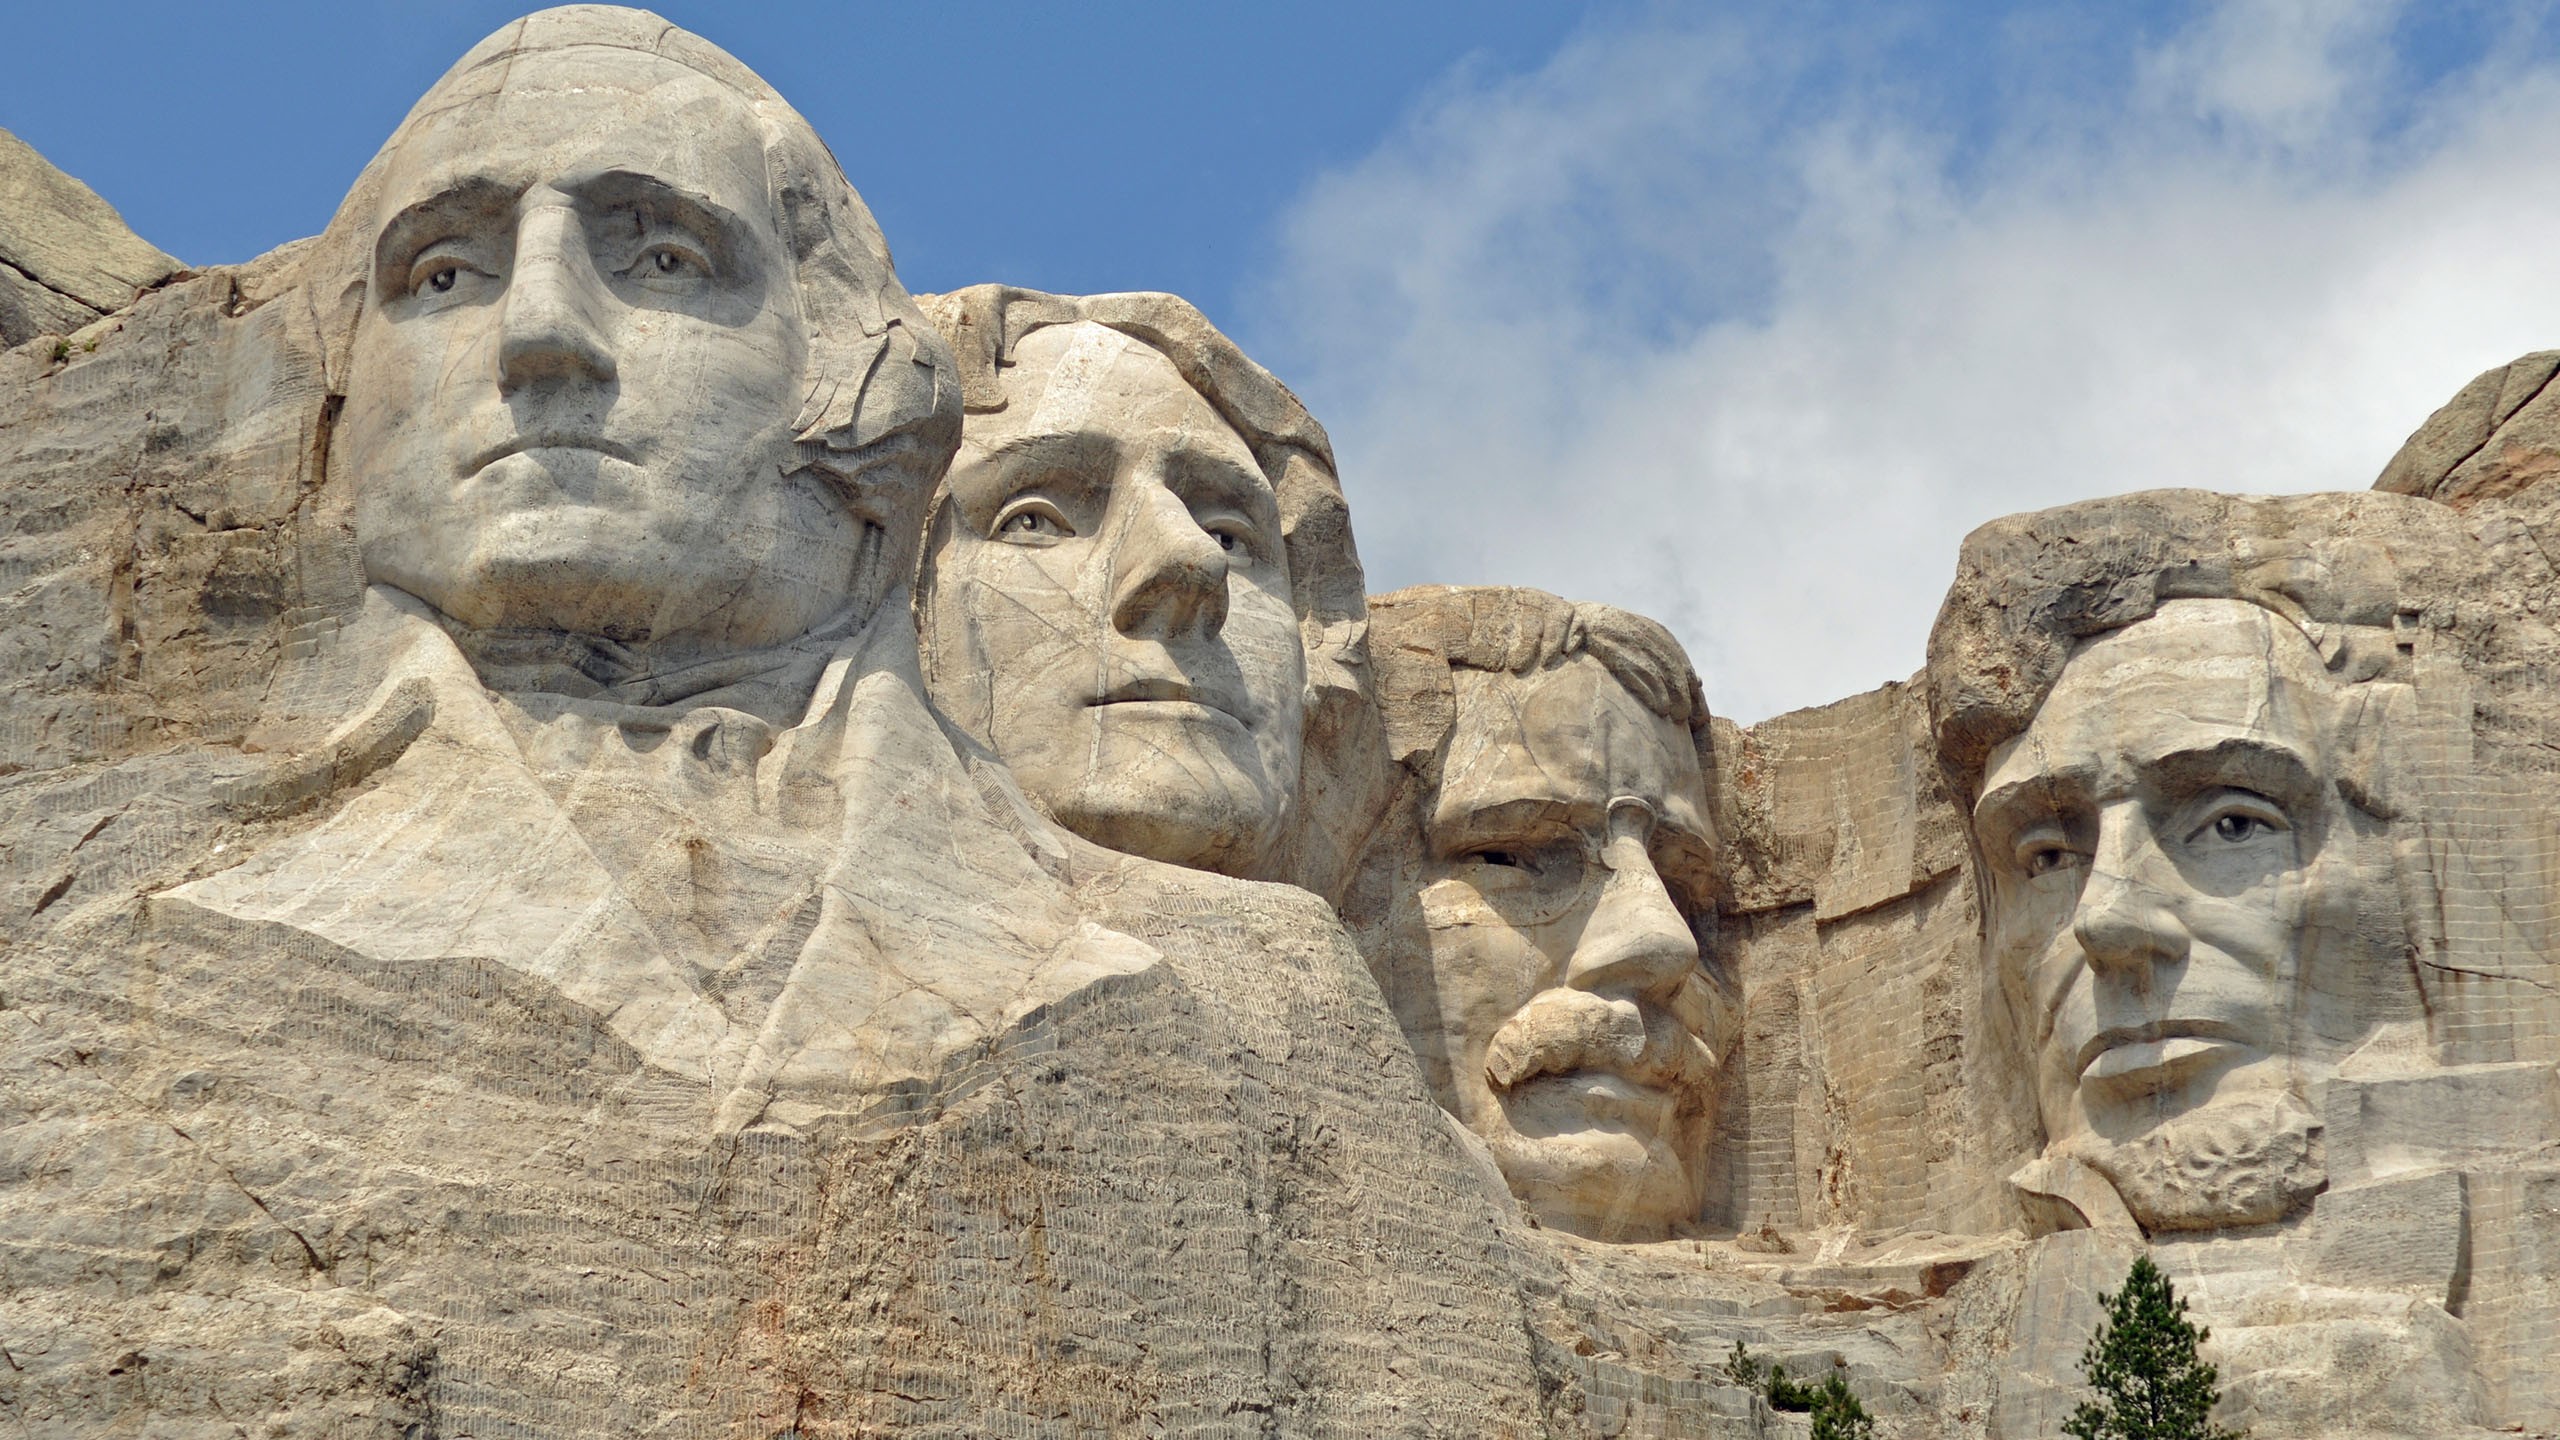 General 2560x1440 landscape Mount Rushmore Thomas Jefferson George Washington Theodore Roosevelt Abraham Lincoln presidents landmark political figure